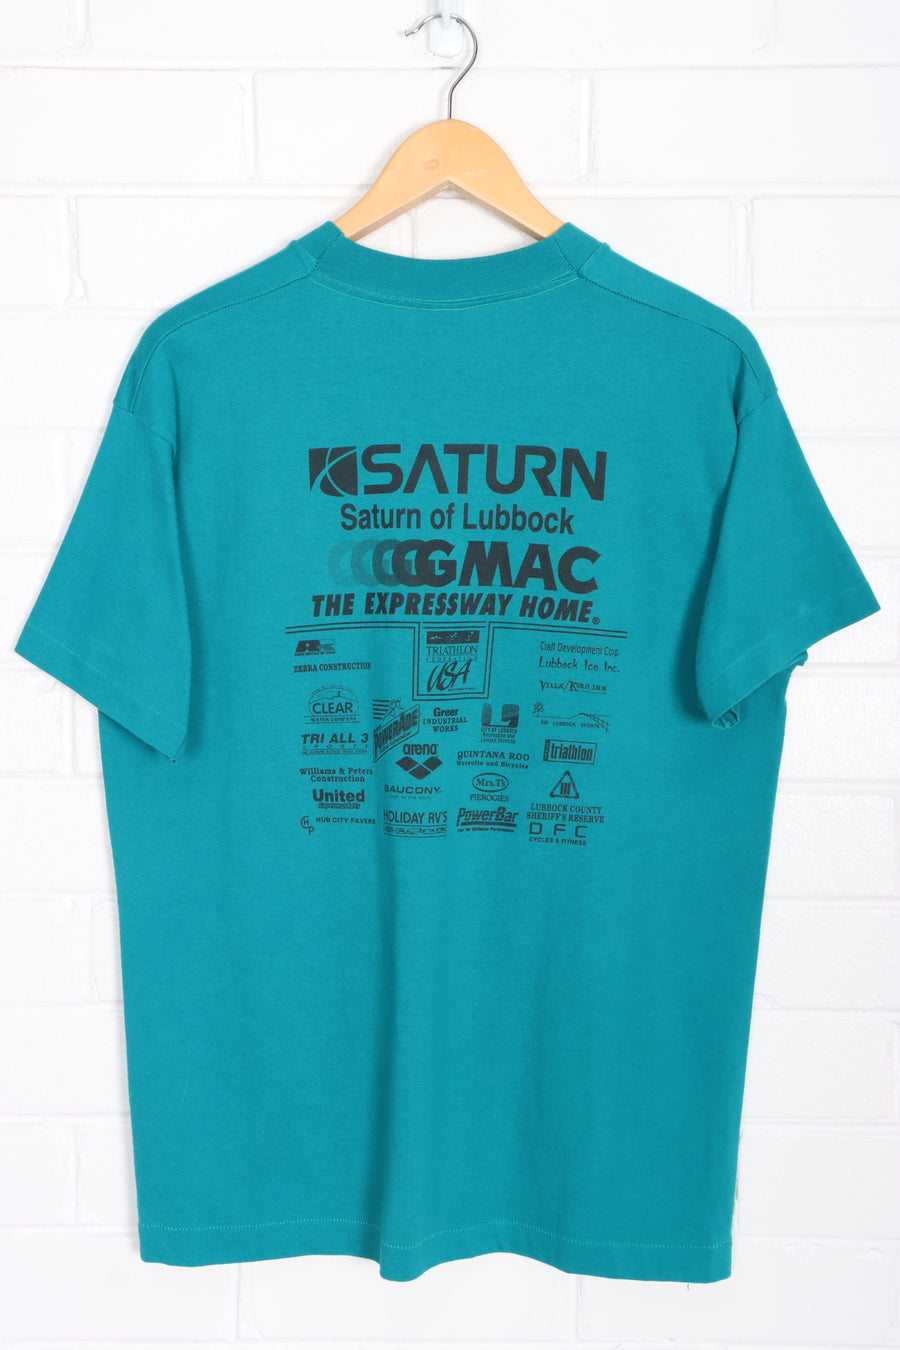 Duathlon 1995 "It's So Easy" Front Back Single Stitch T-Shirt USA Made (M-L)